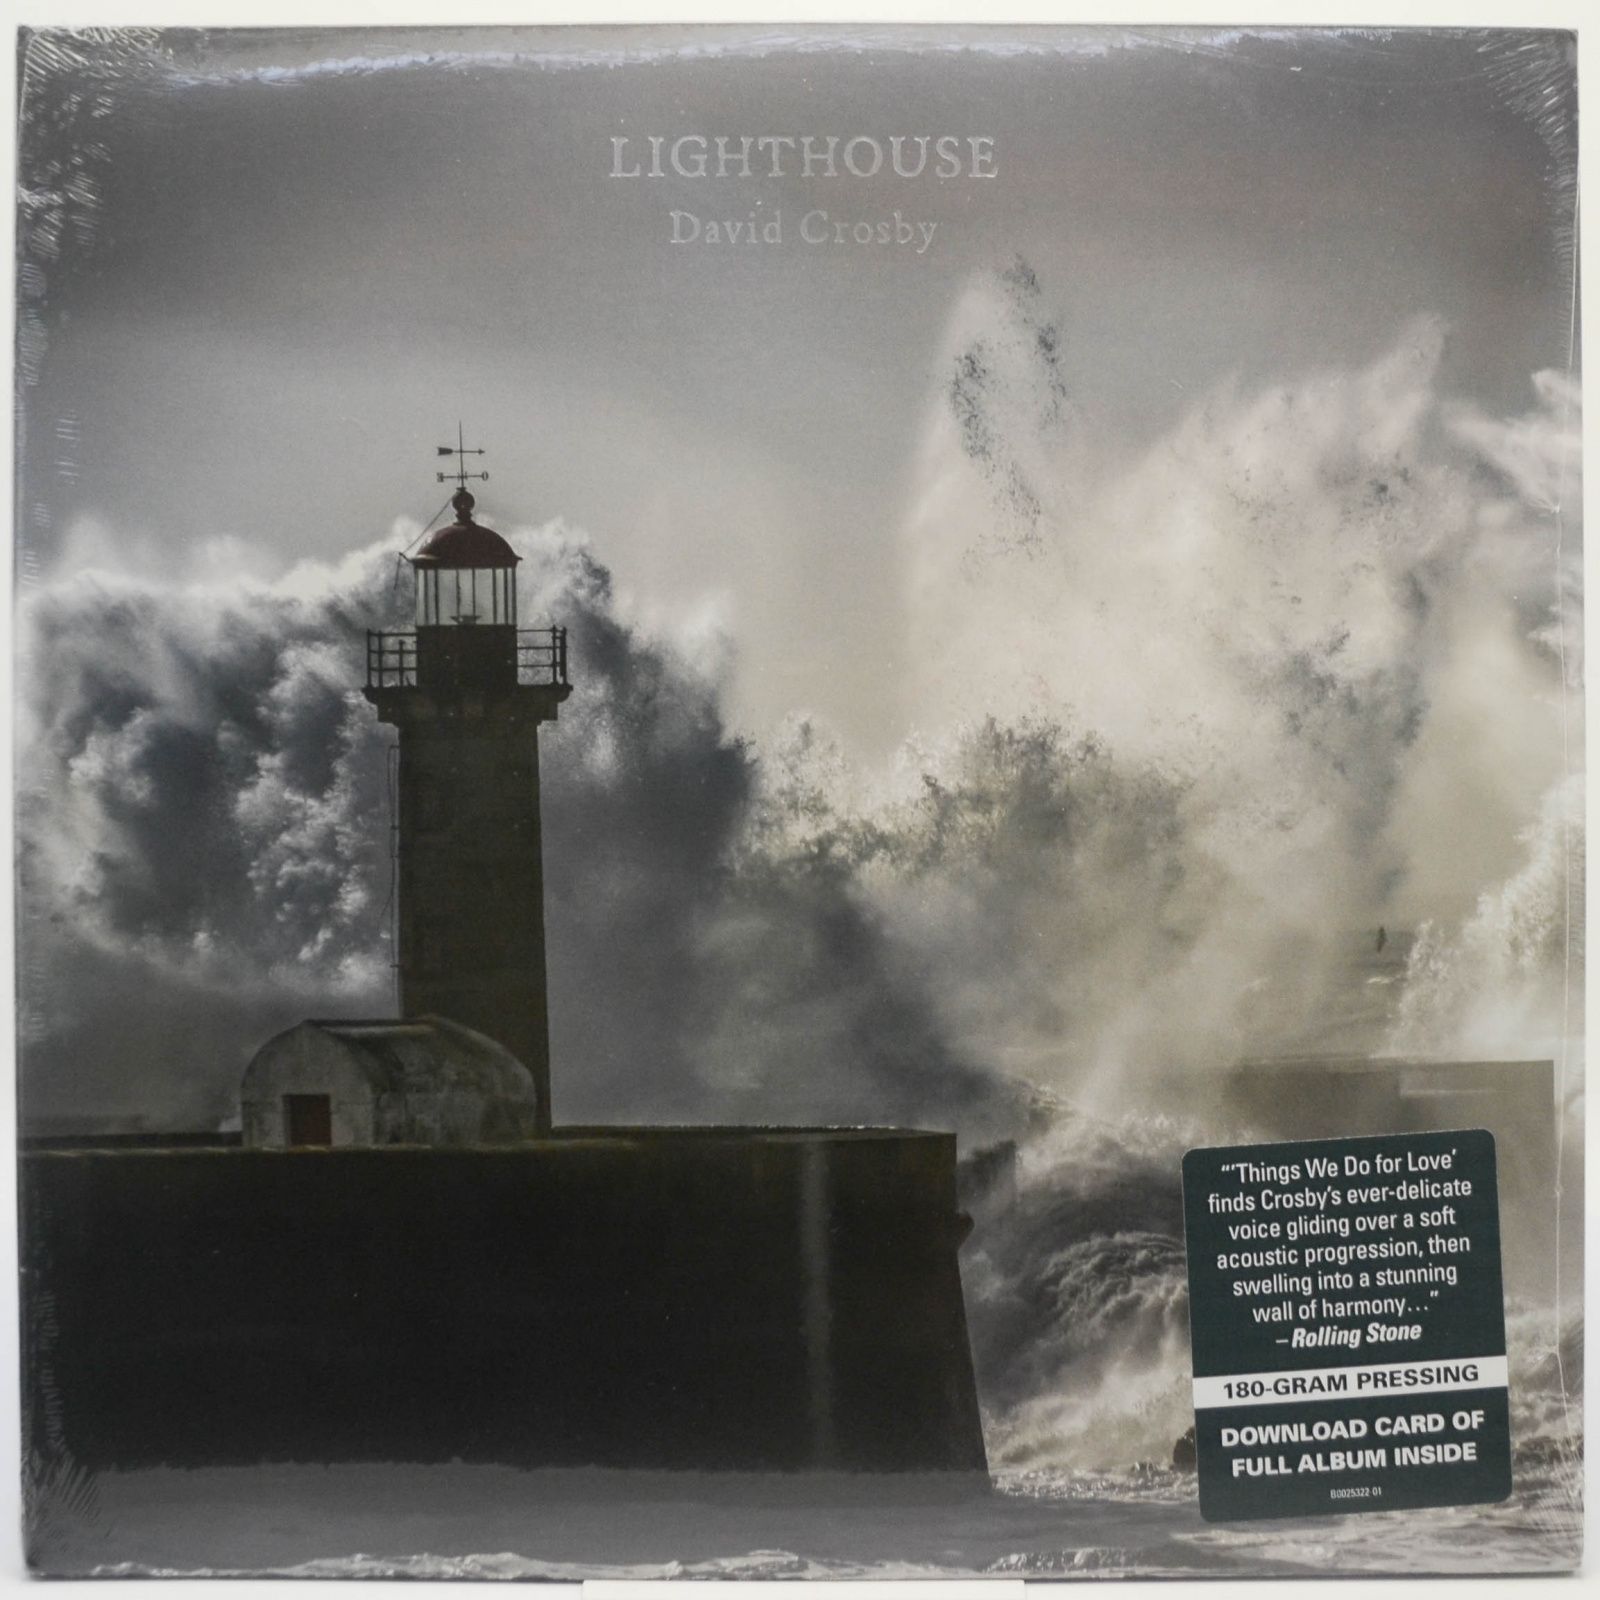 David Crosby — Lighthouse, 2016